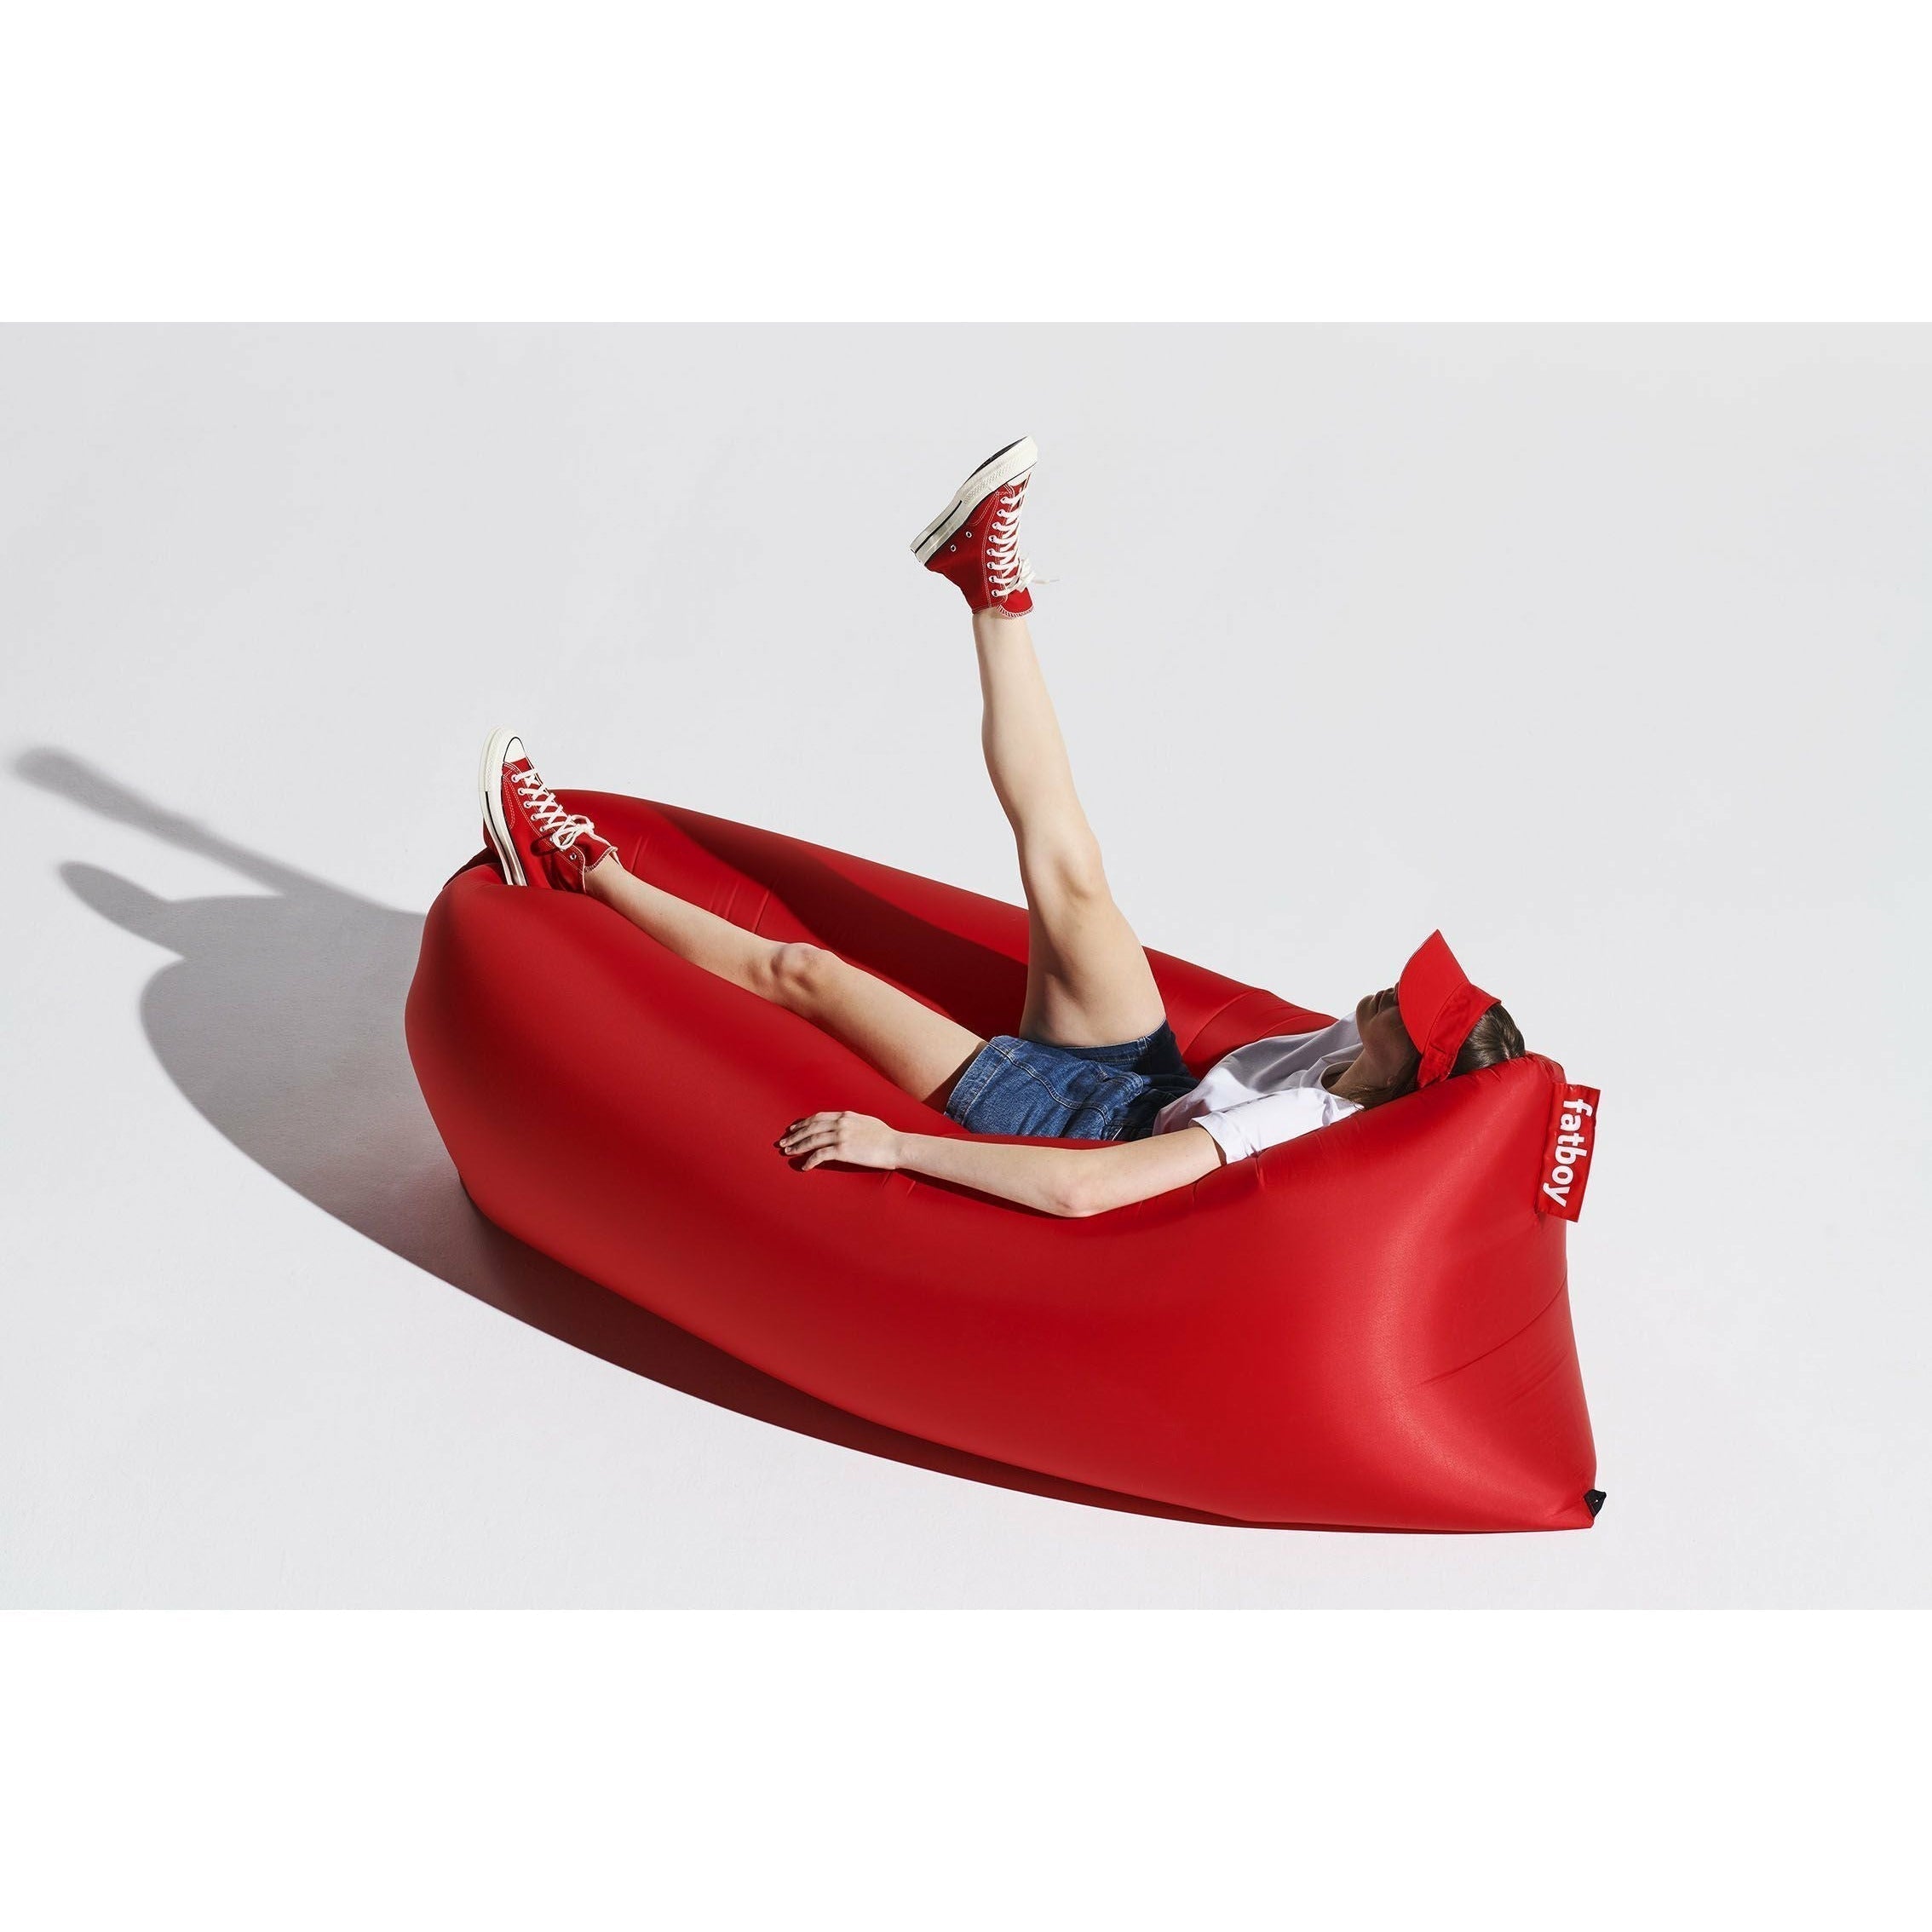 Fatboy Lamzac Inflatable Air Sofa 3.0, Red